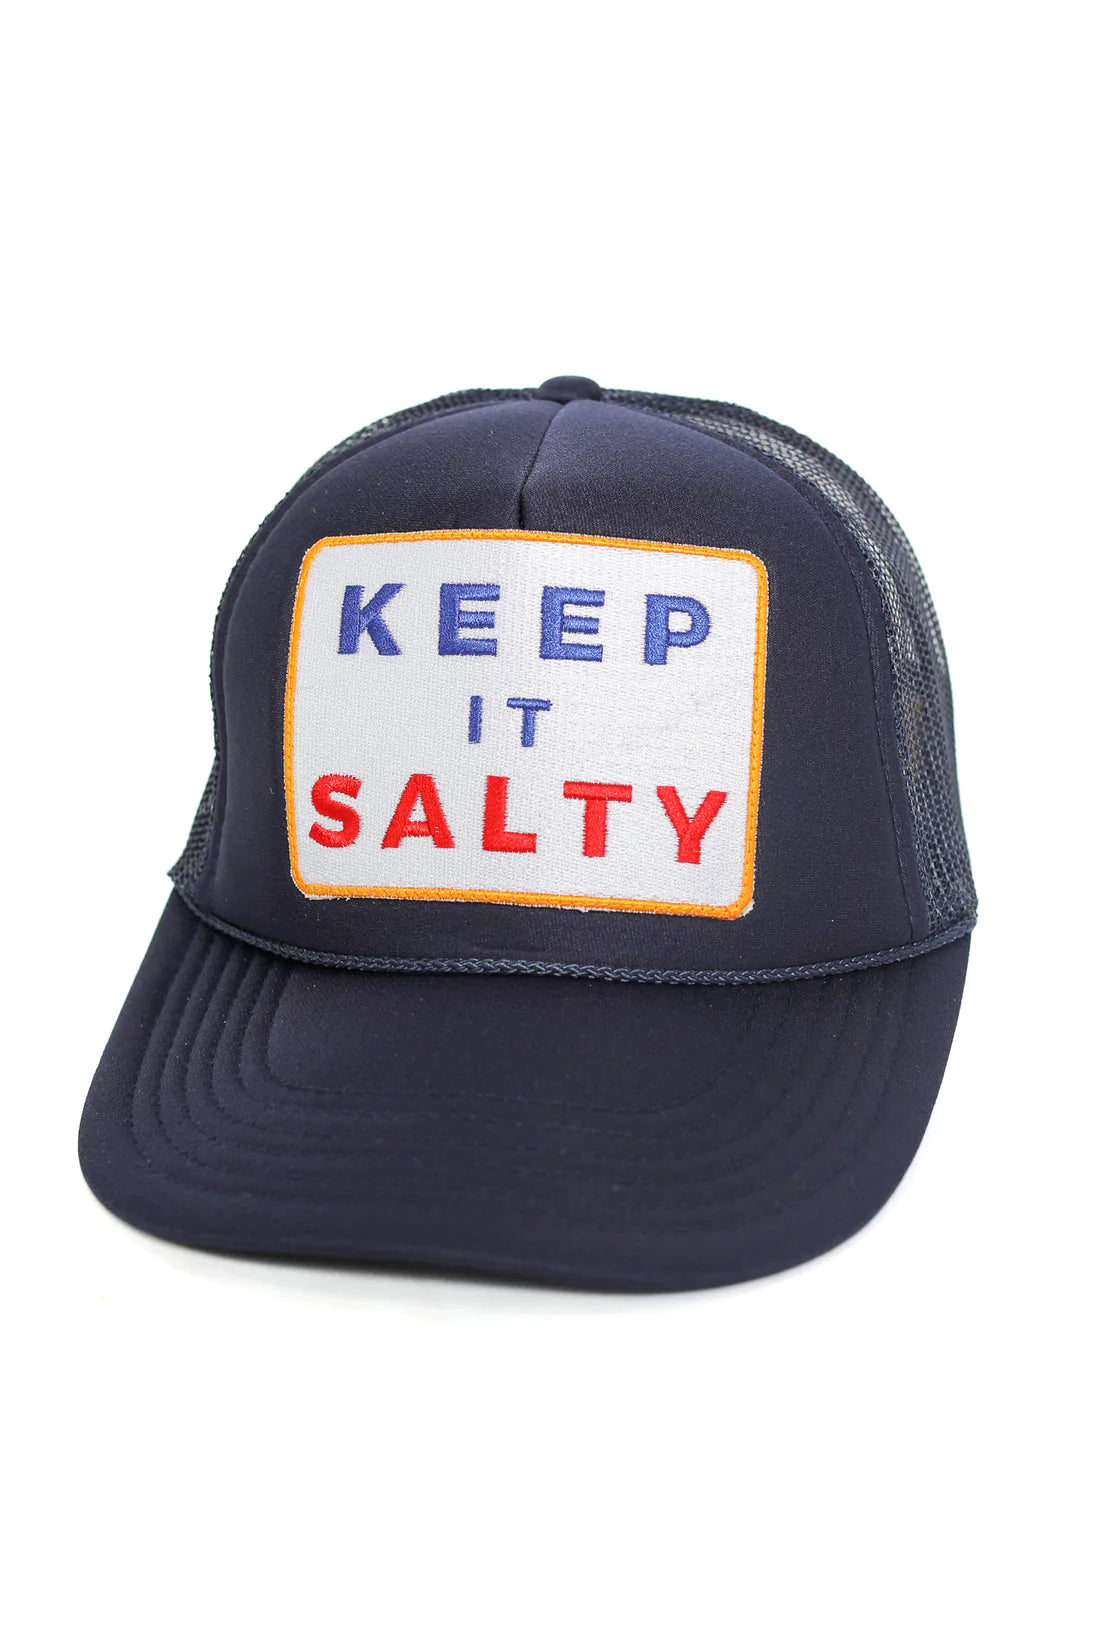 Keep It Salty- Navy